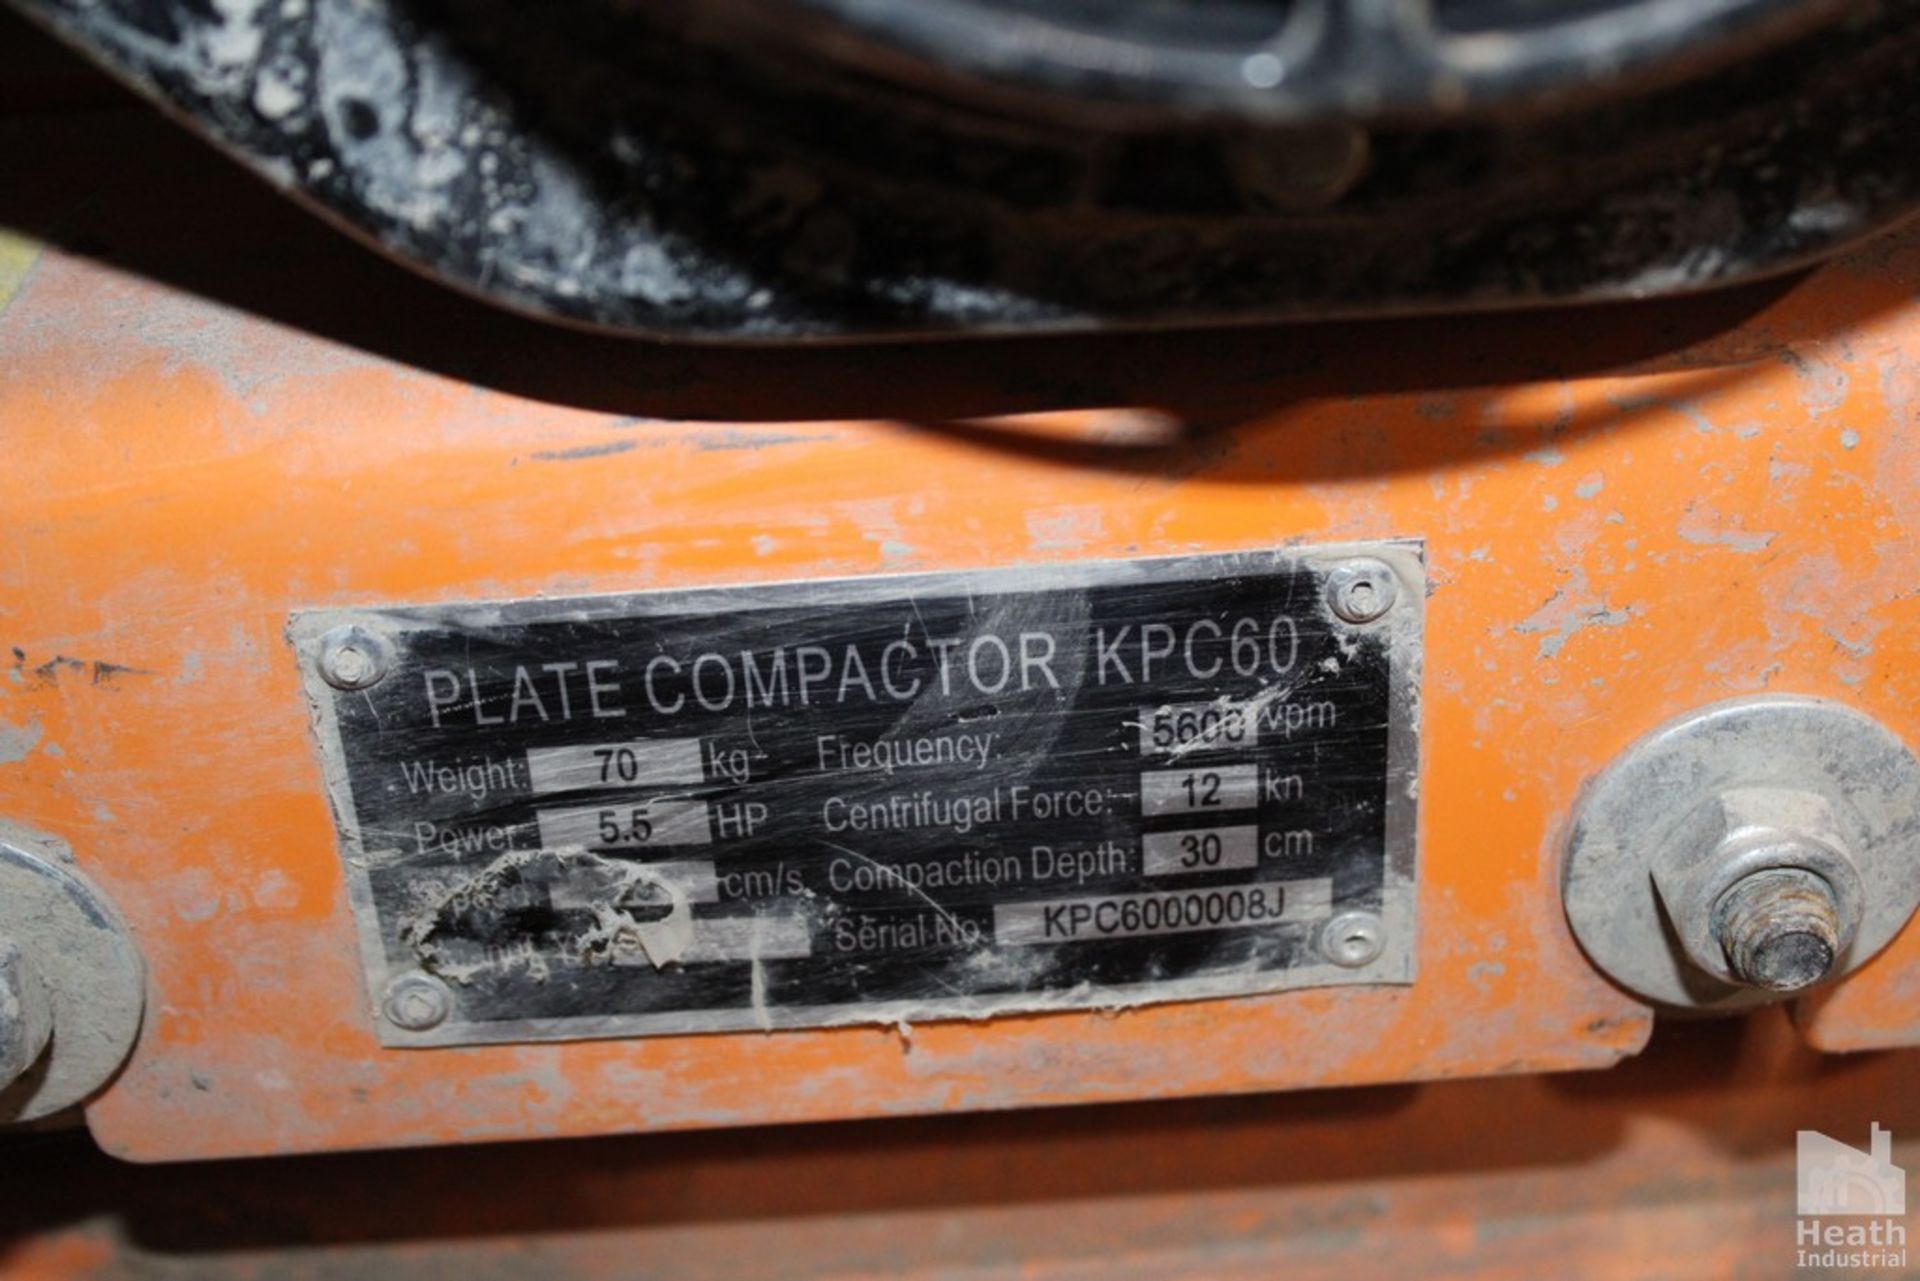 KUSHLAN MODEL KPC60 GAS POWERED PLATE COMACTOR, LONCIN 196CC ENGINE (5.5 HP) - Image 2 of 3